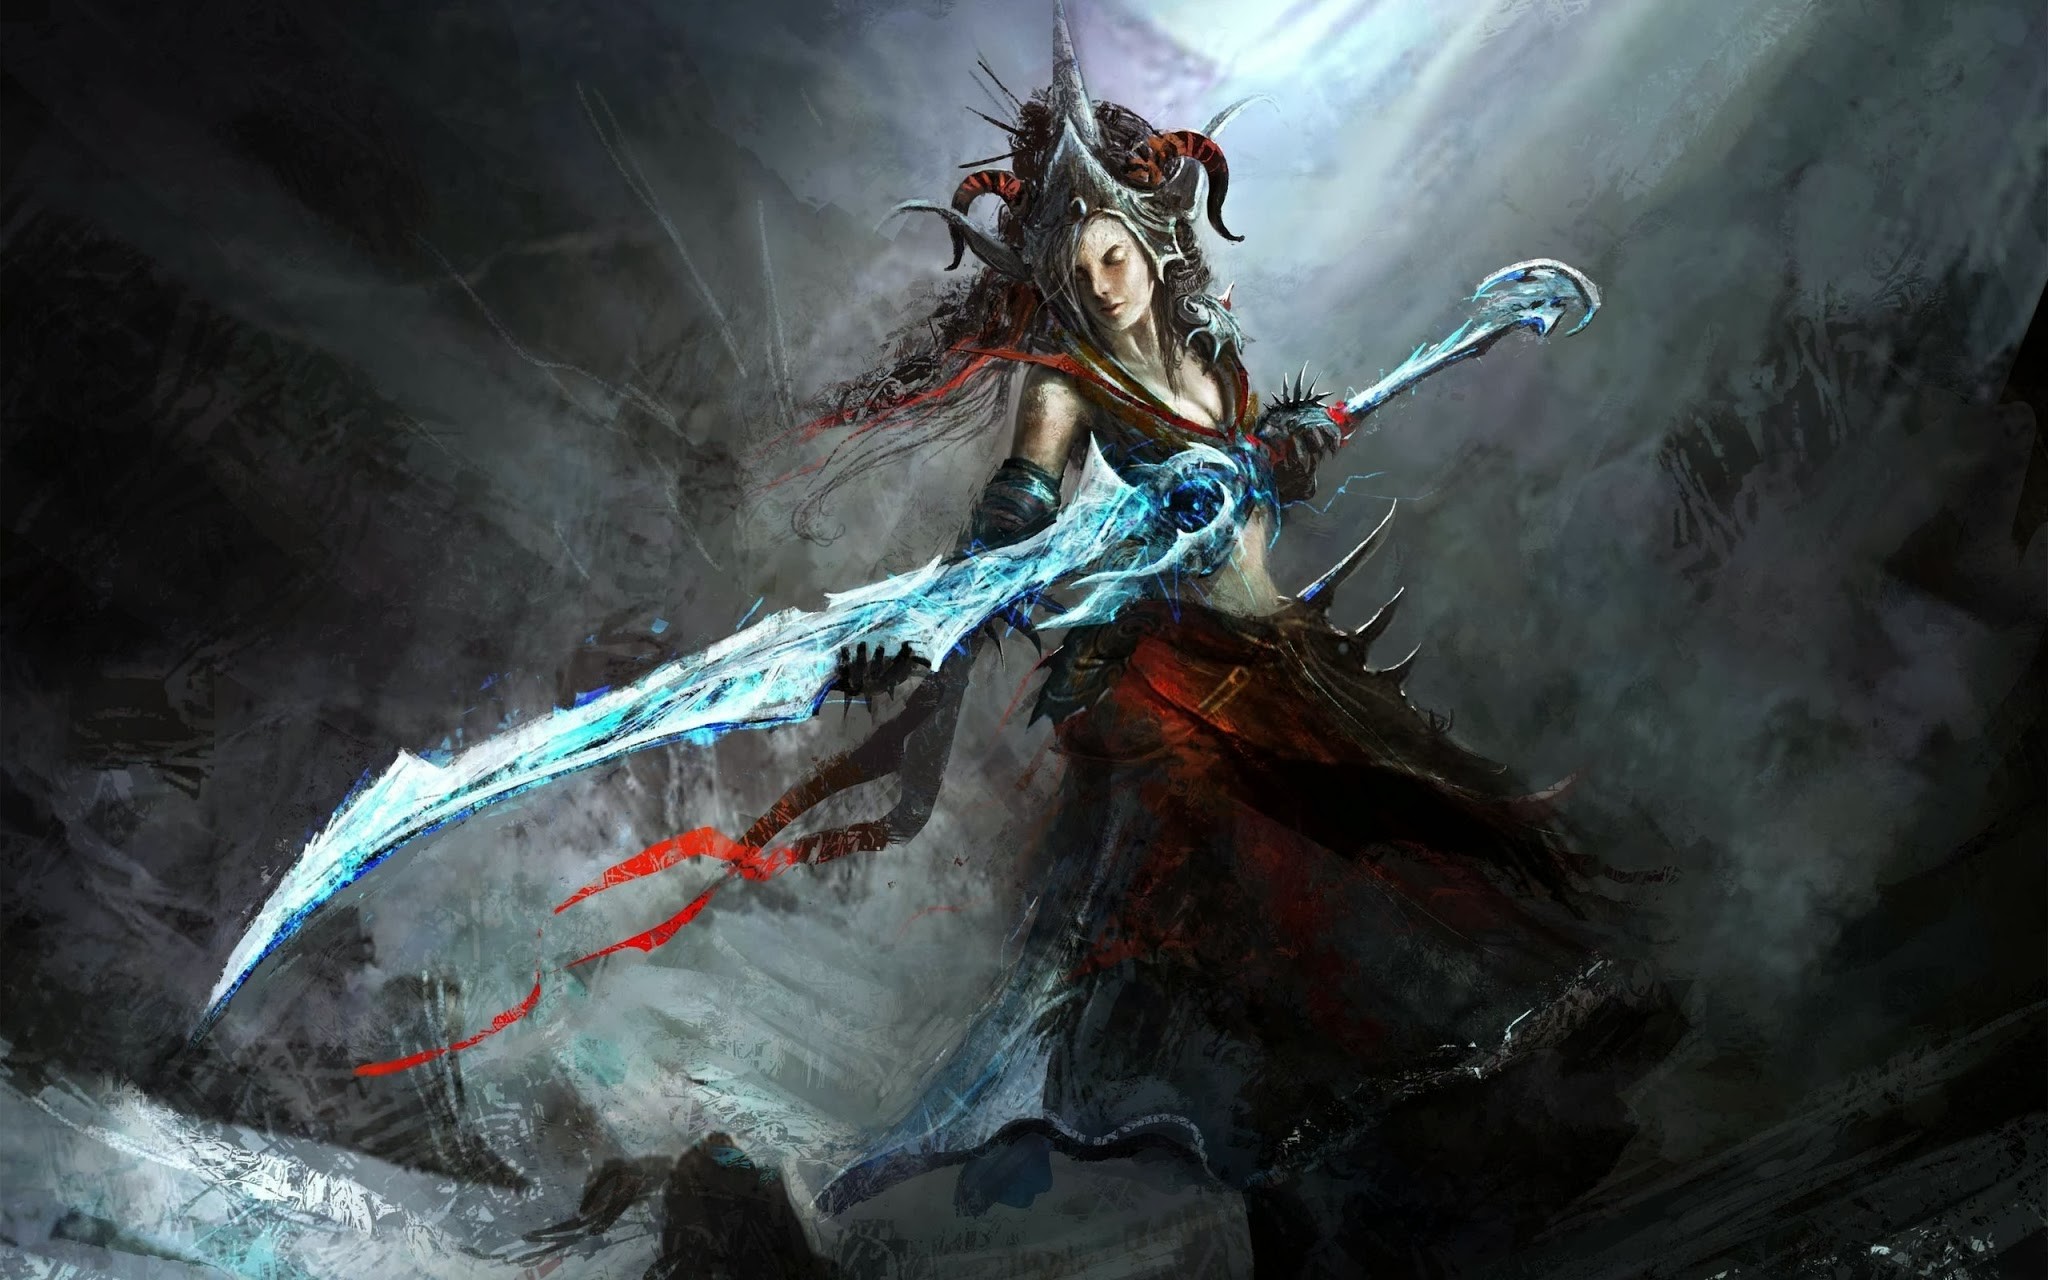 General 2048x1280 fantasy art fantasy girl weapon artwork women with swords sword